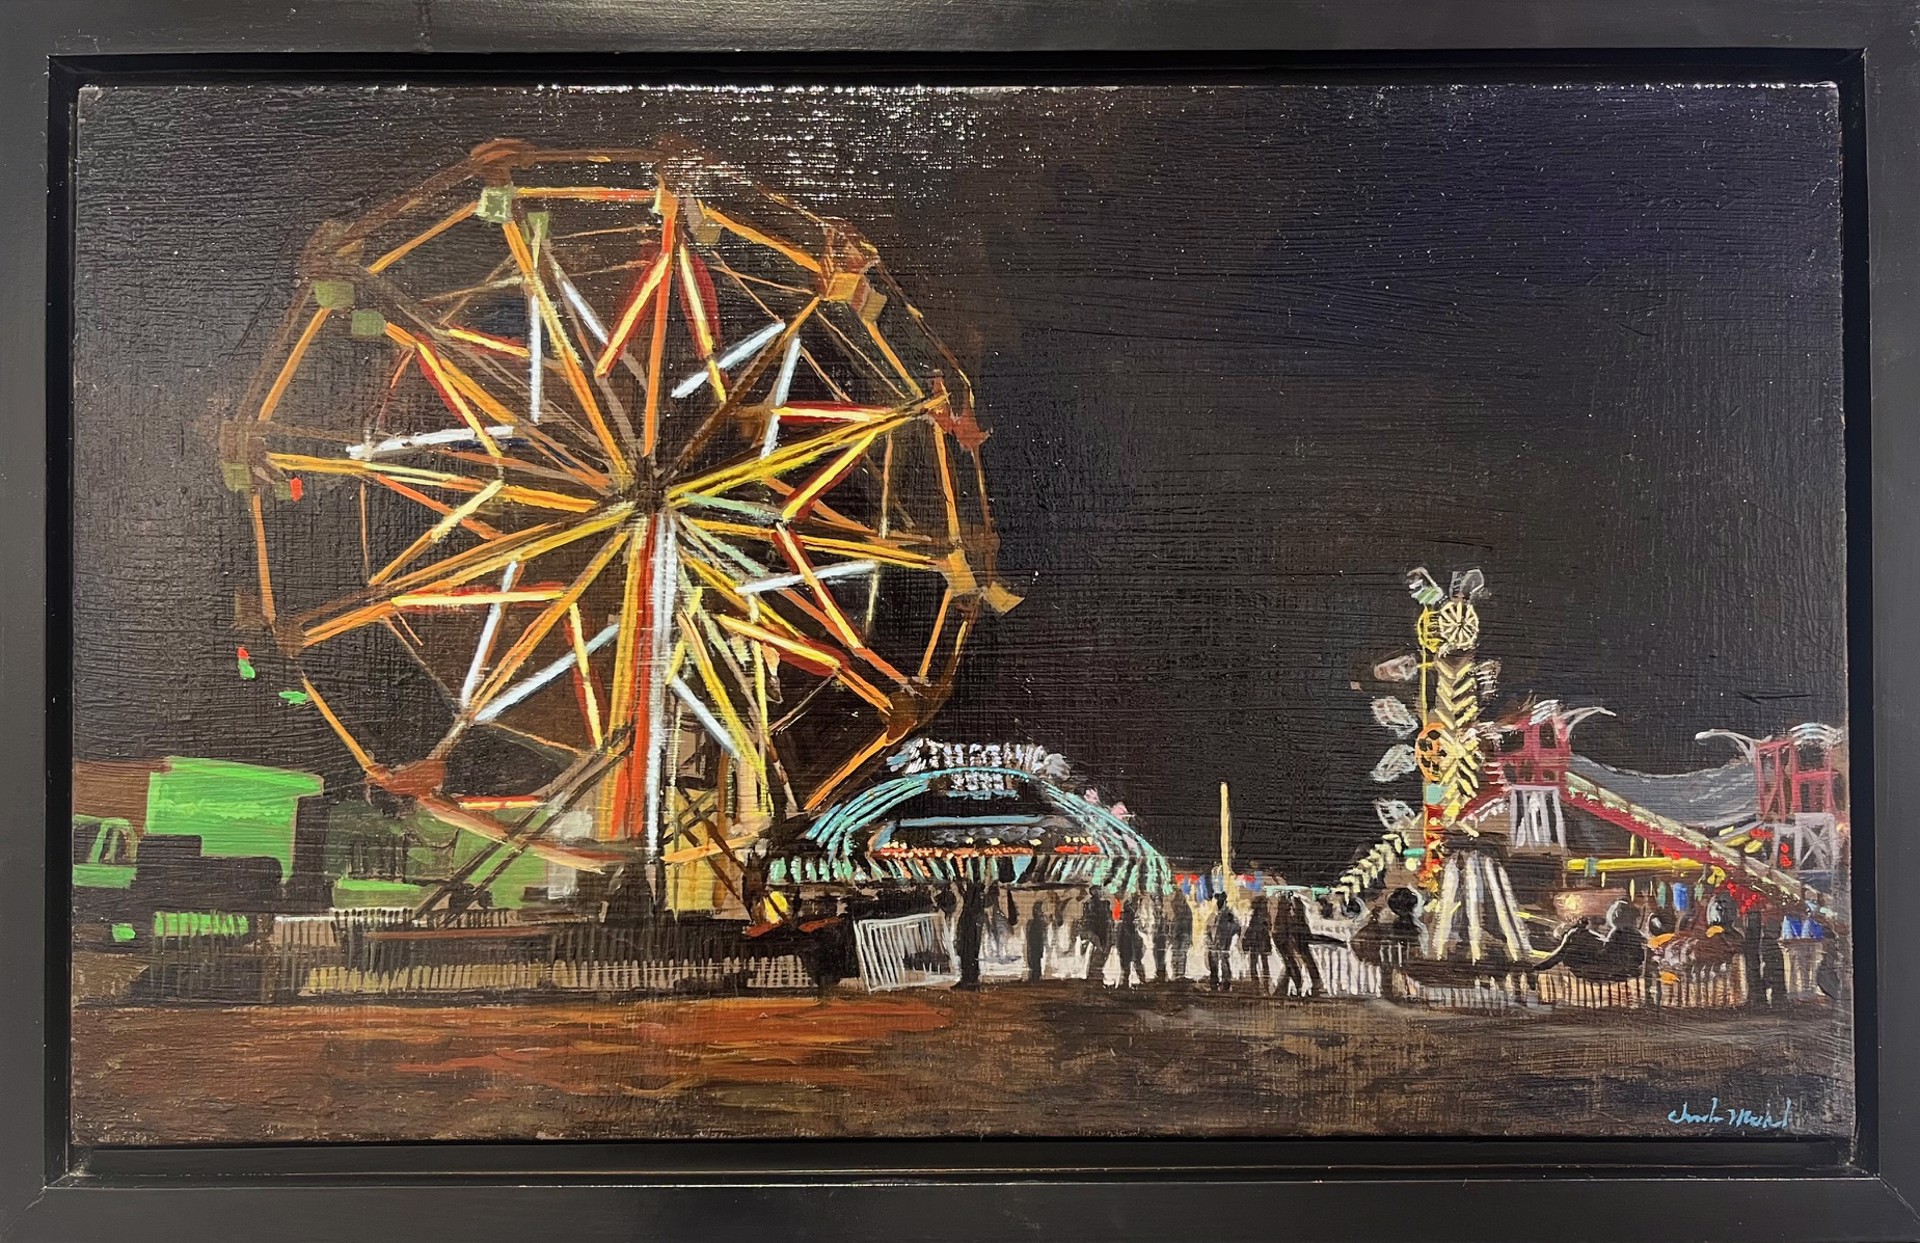 The Ferris Wheel by Charlie Meckel